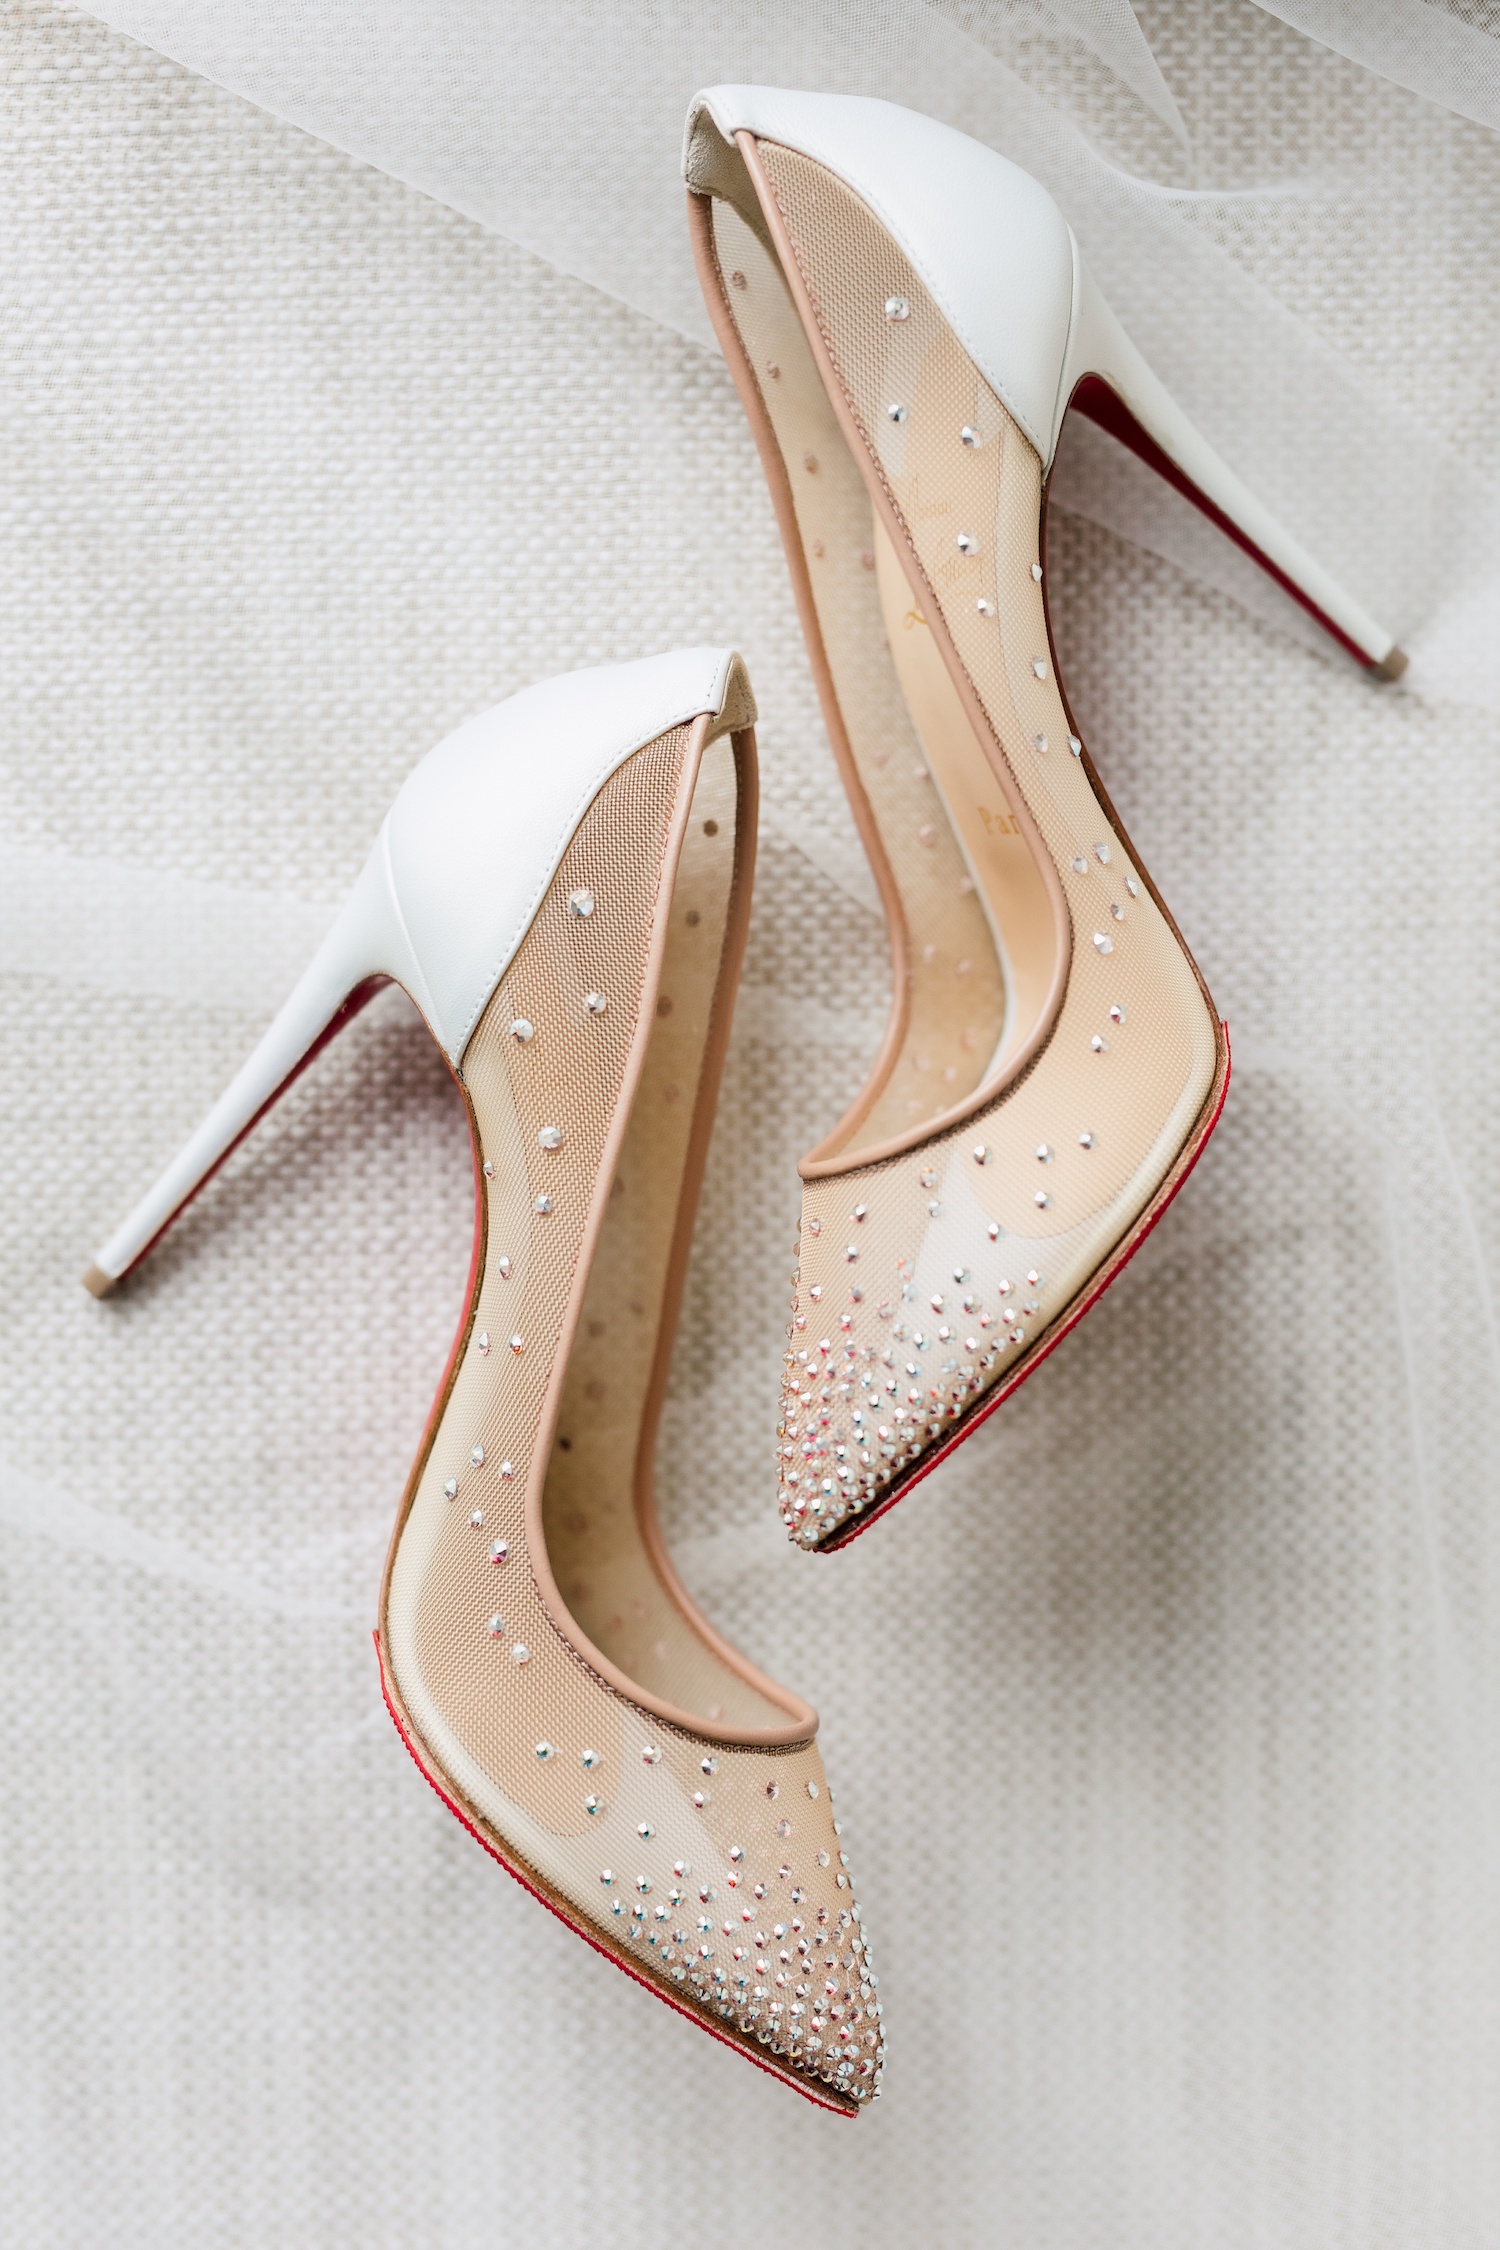 mallory wedding shoes